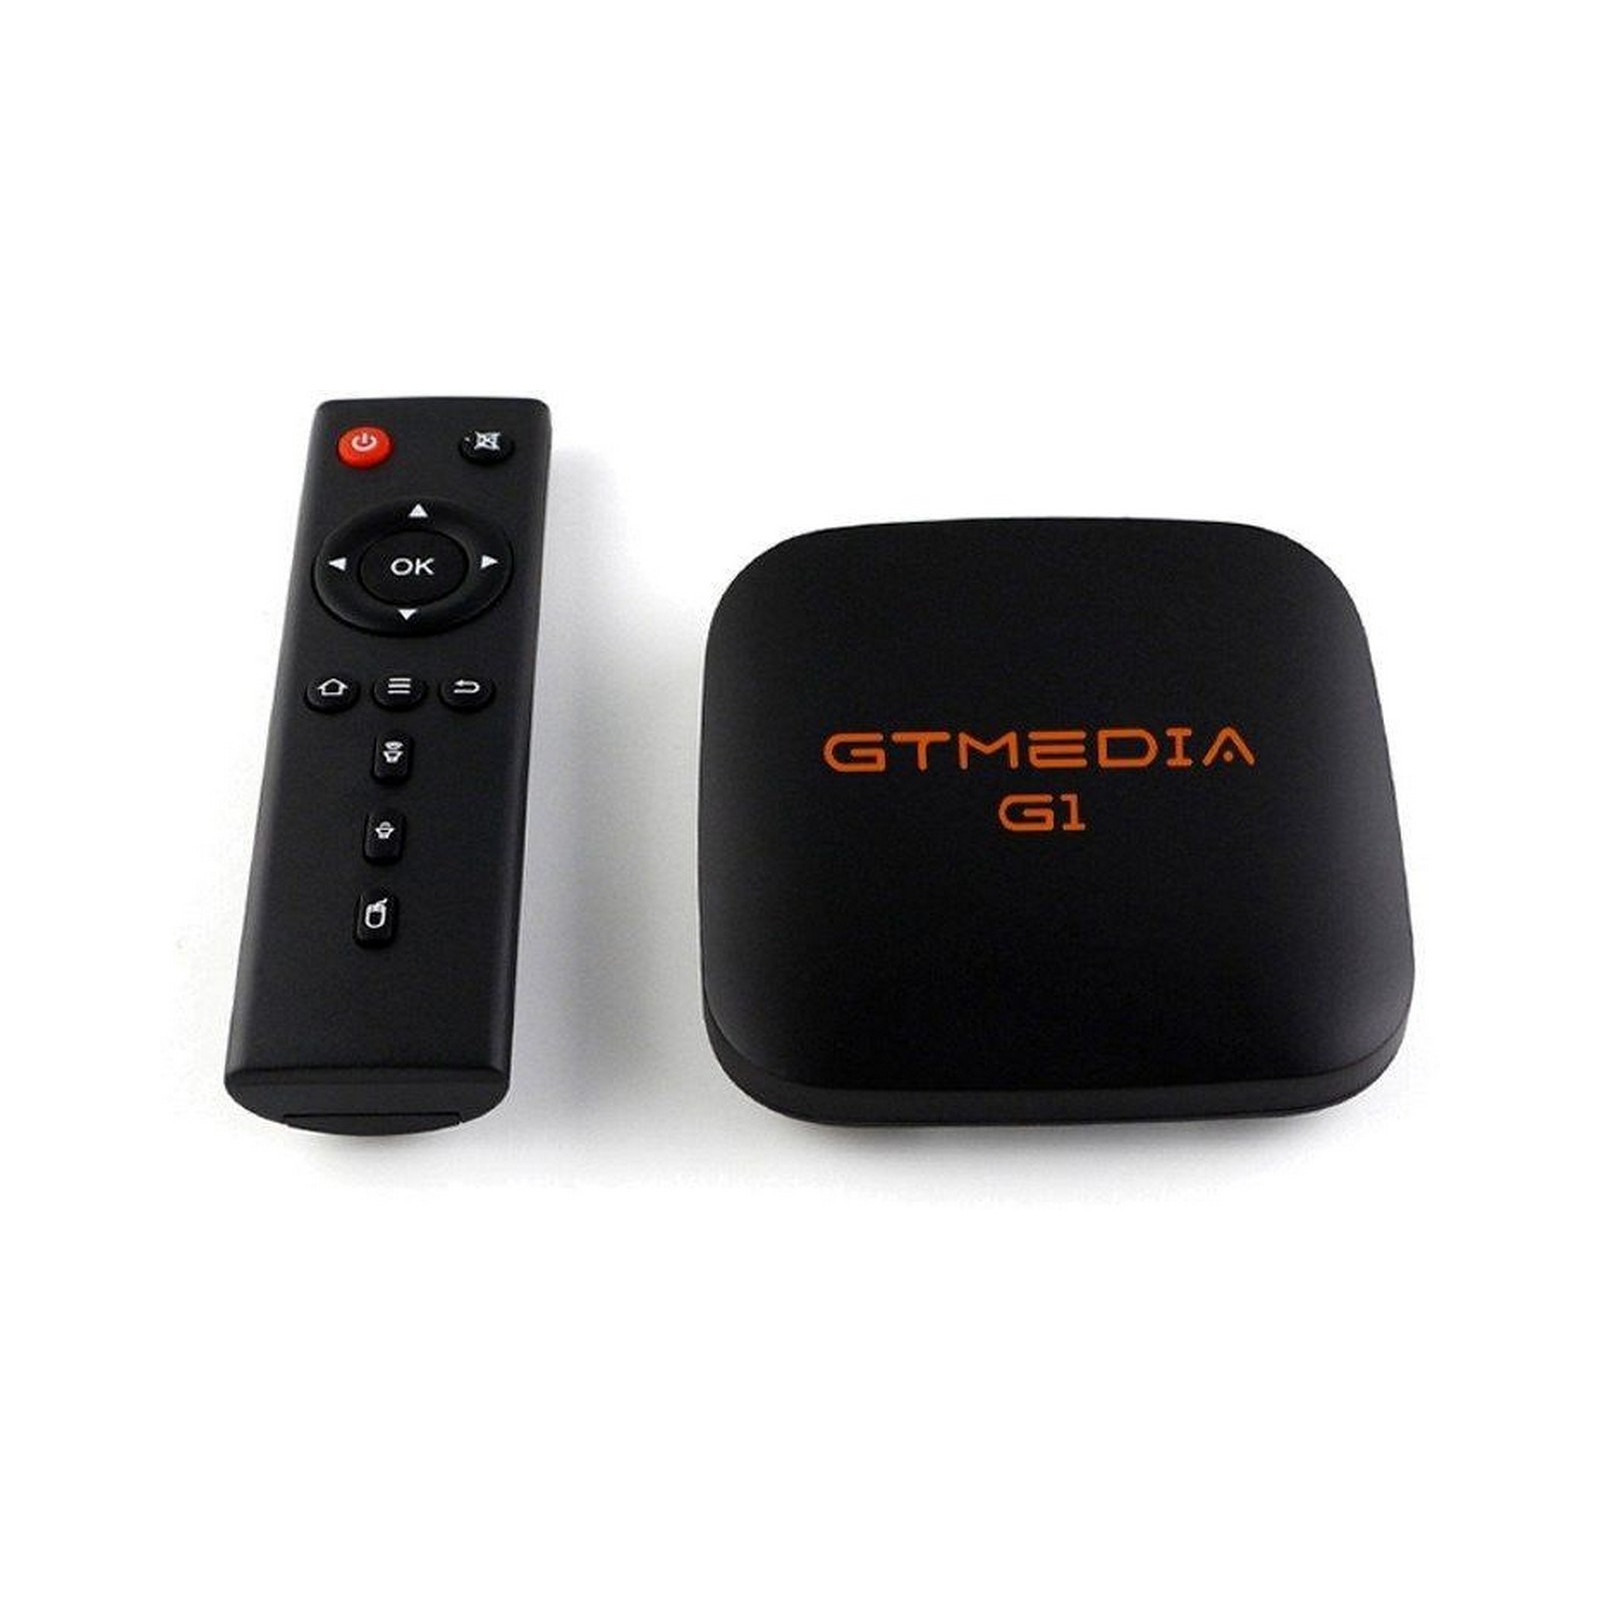 ANDROID TV BOX GTMEDIA G1